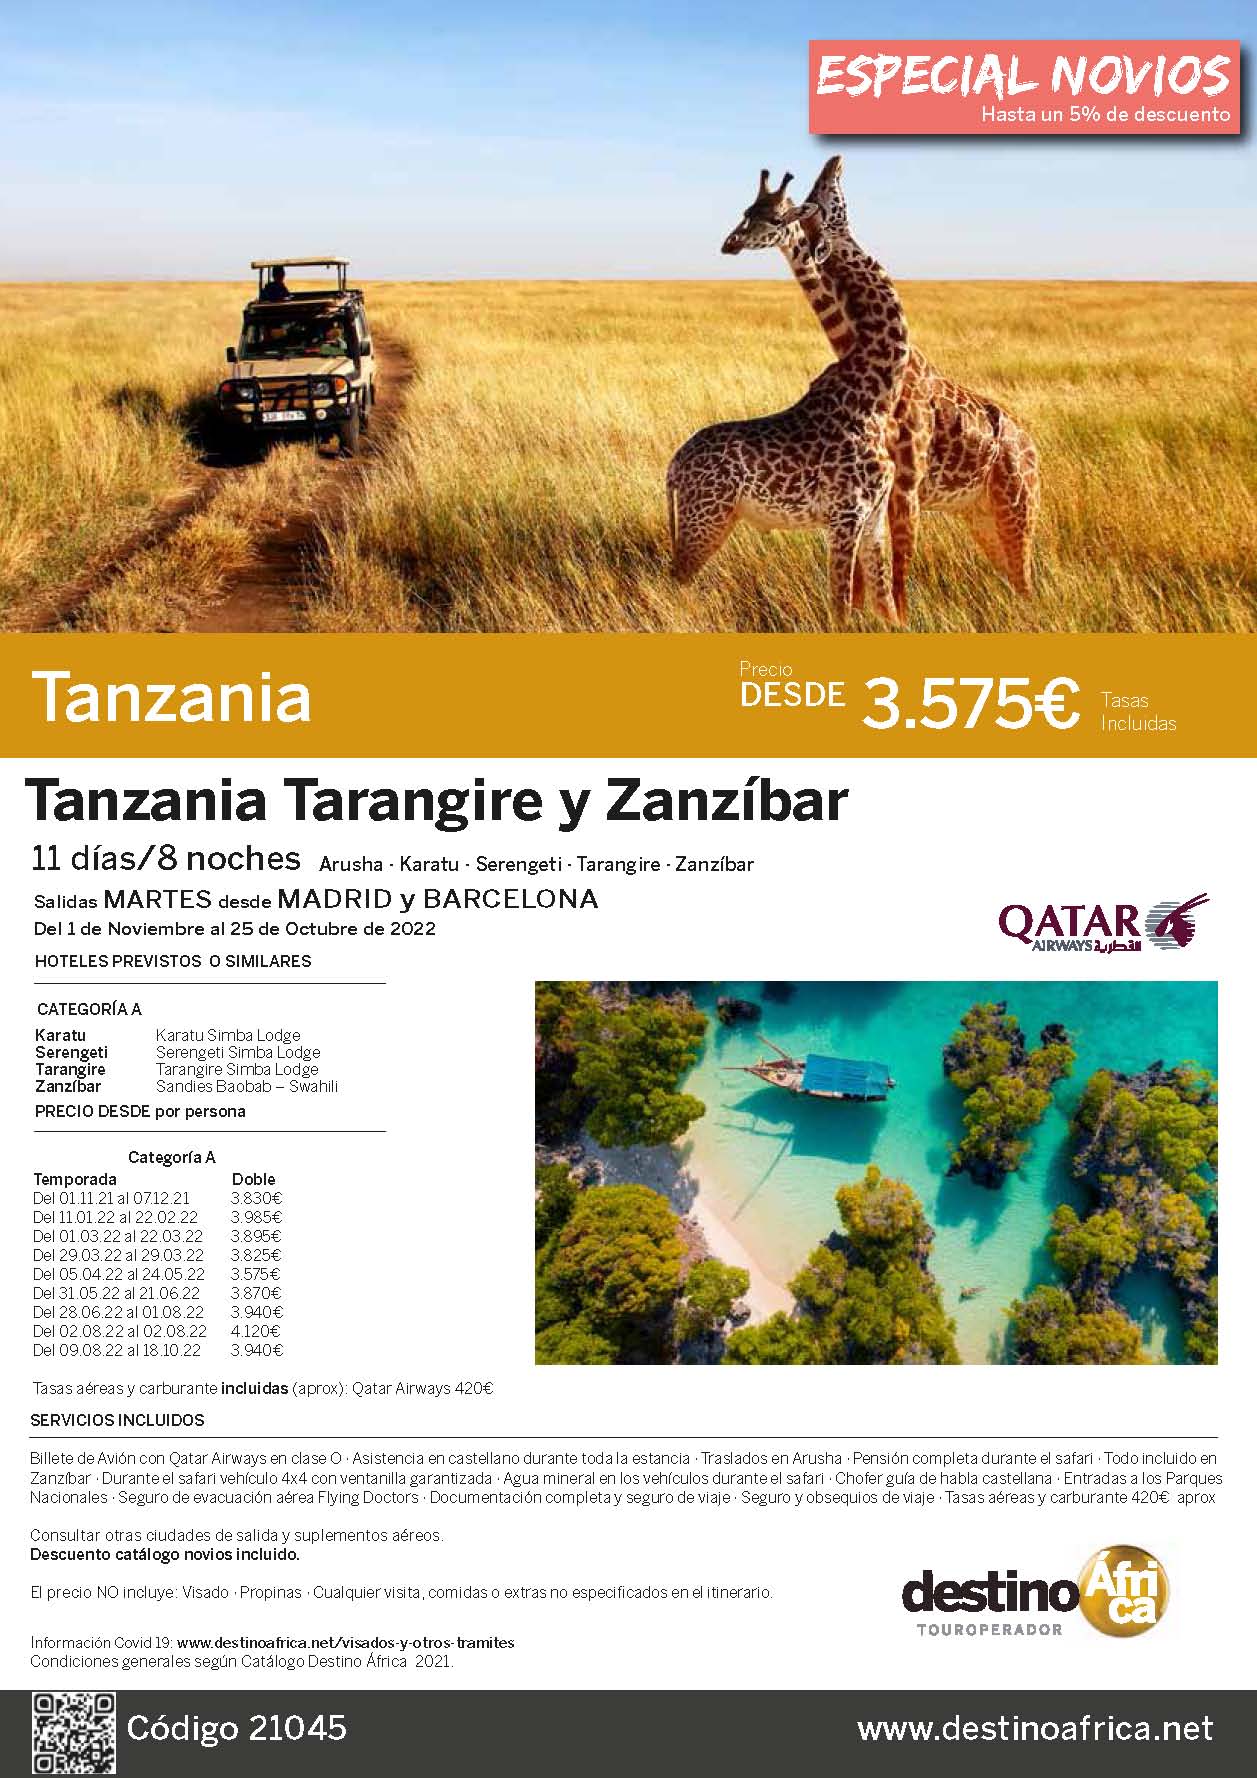 Oferta Destino Asia Tanzania 2022 Tanzania Tarangire y Zanzibar 11 dias salidas Madrid Barcelona vuelos Qatar Airways